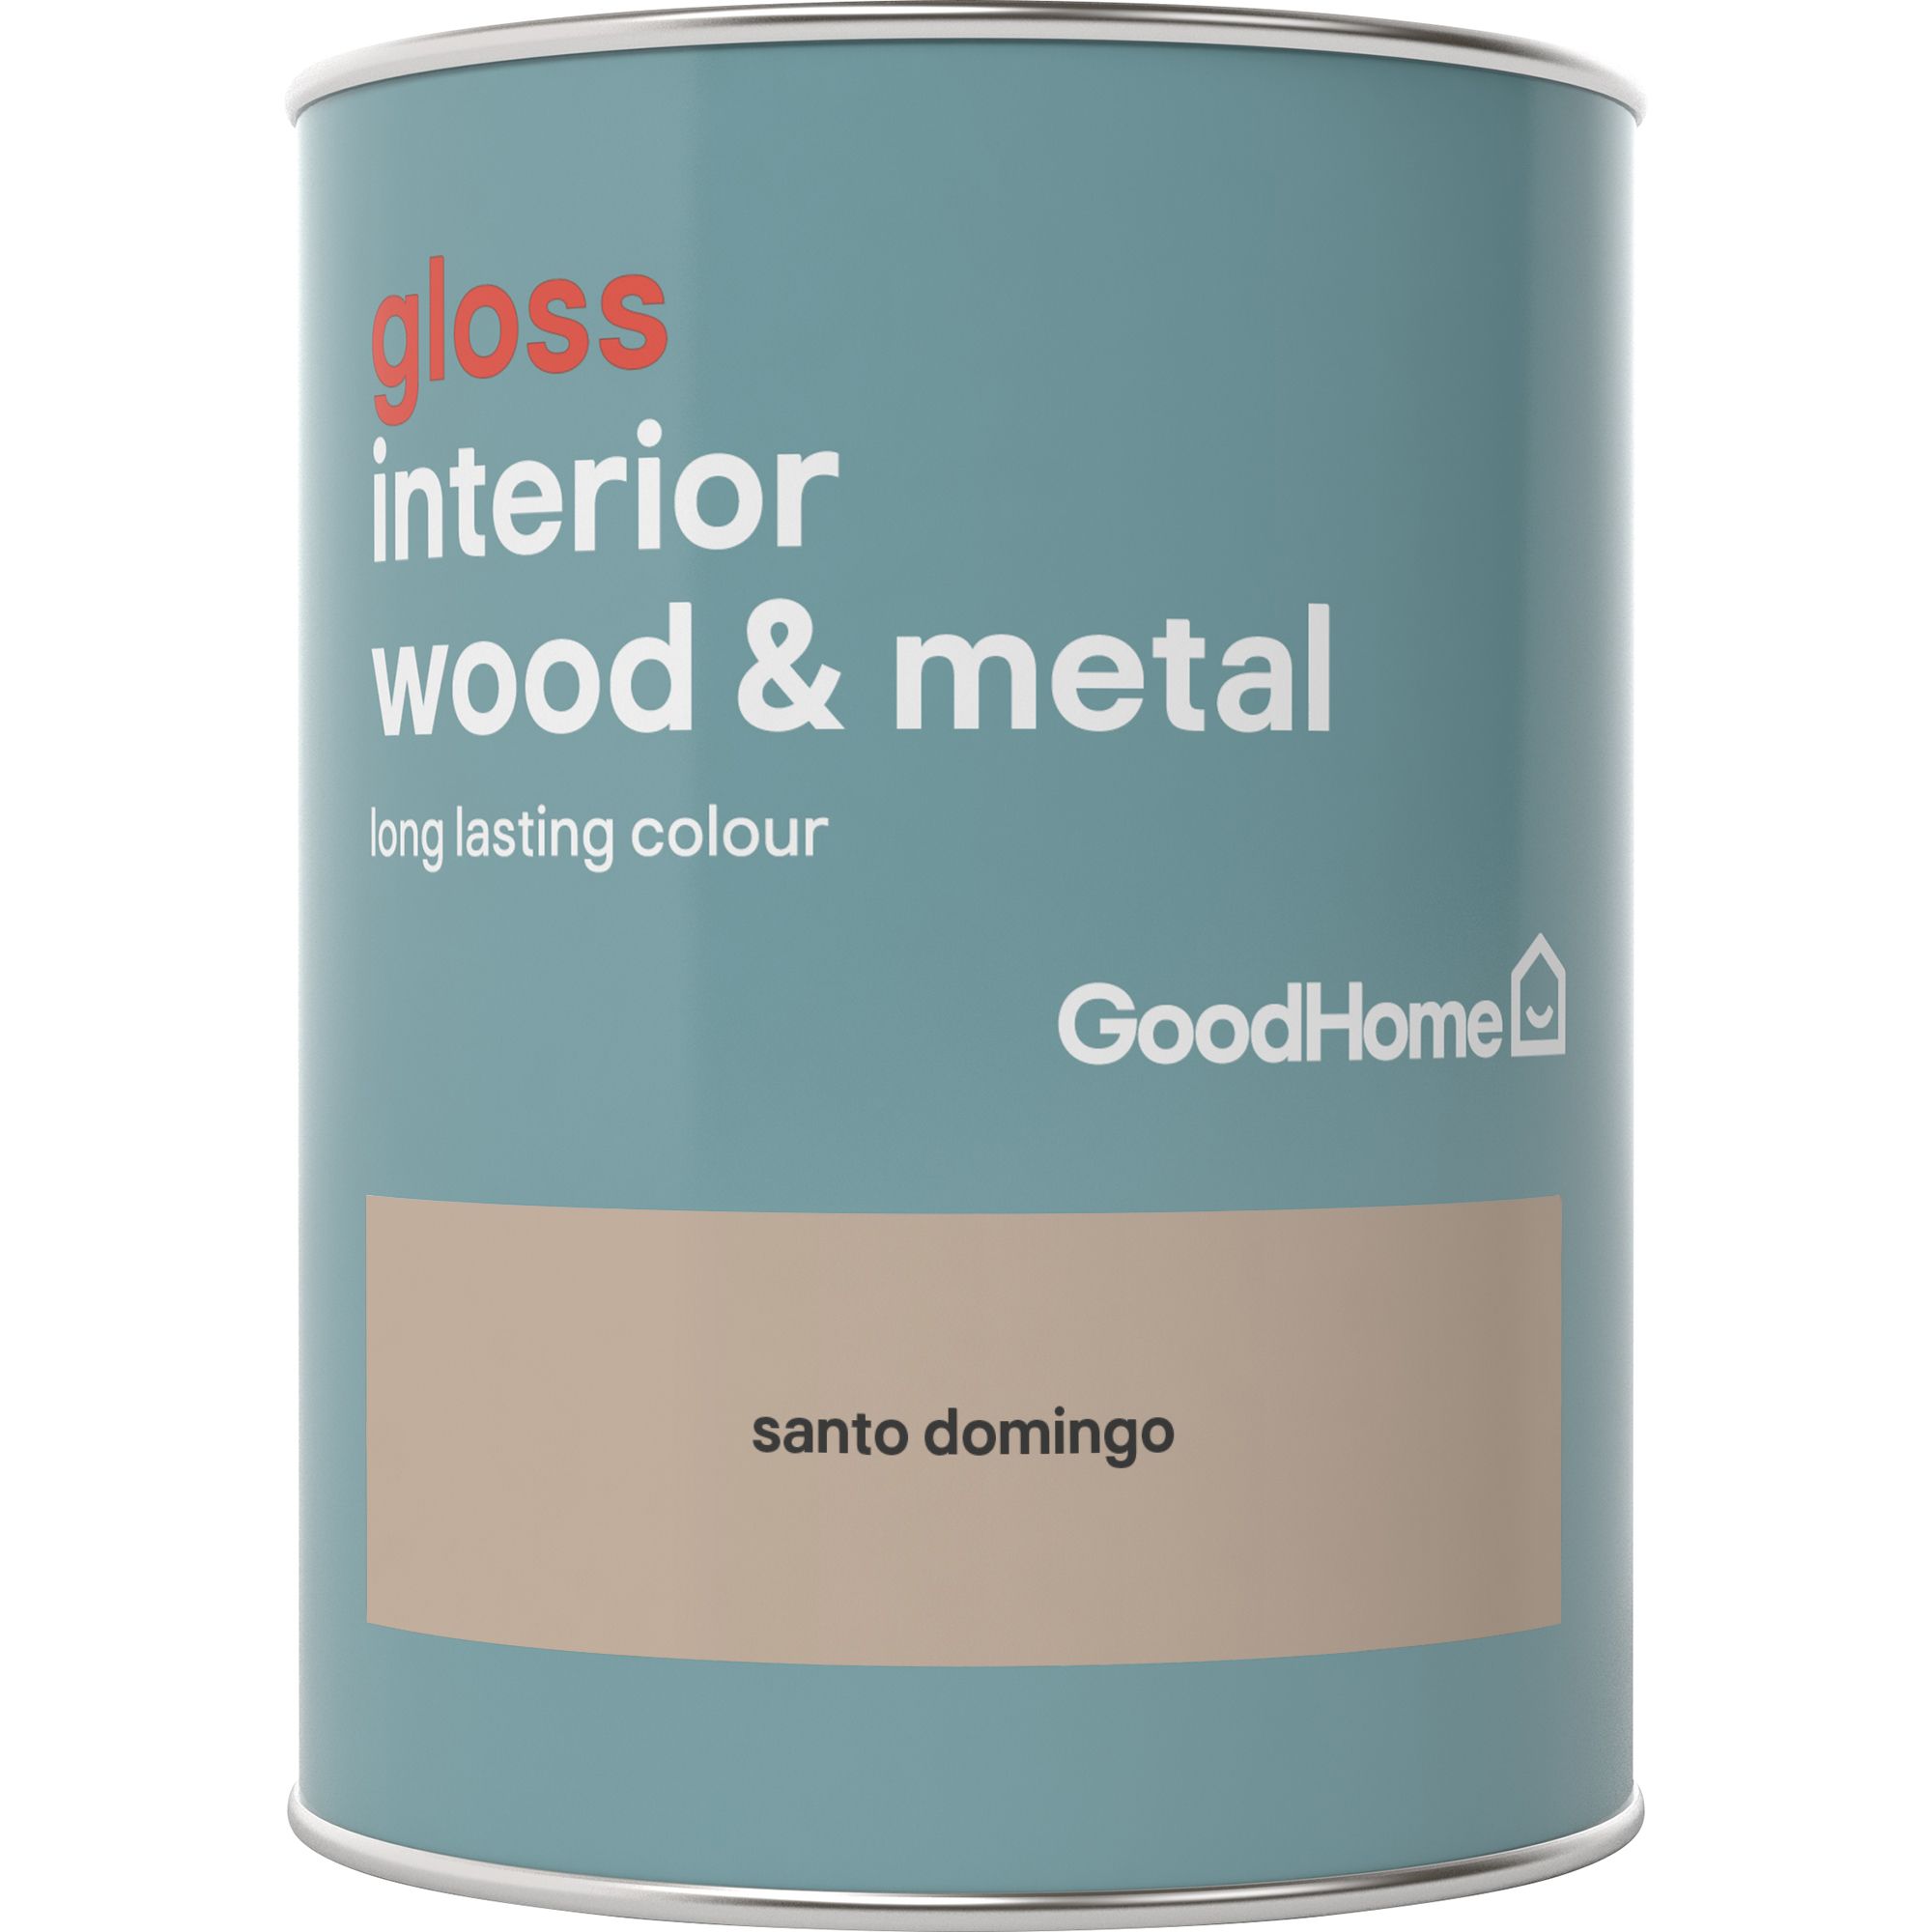 GoodHome Santo domingo Gloss Metal & wood paint, 750ml